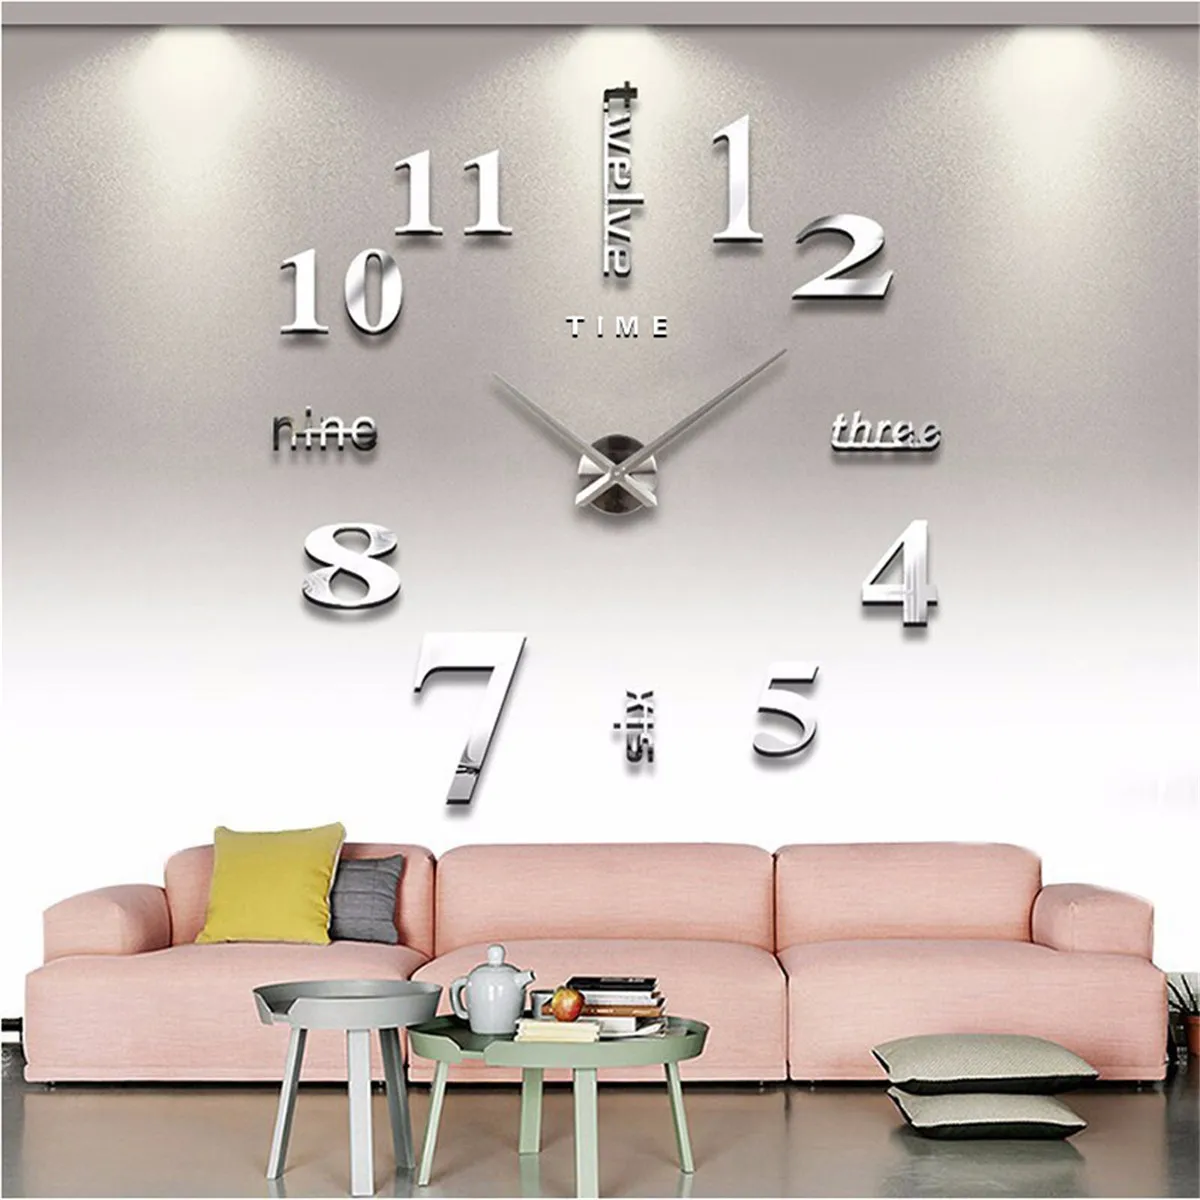 

3D Wall Clock Mirror Wall Stickers Creative DIY Wall Clocks Removable Art Decal Sticker Home Decor Living Room Quartz Needle